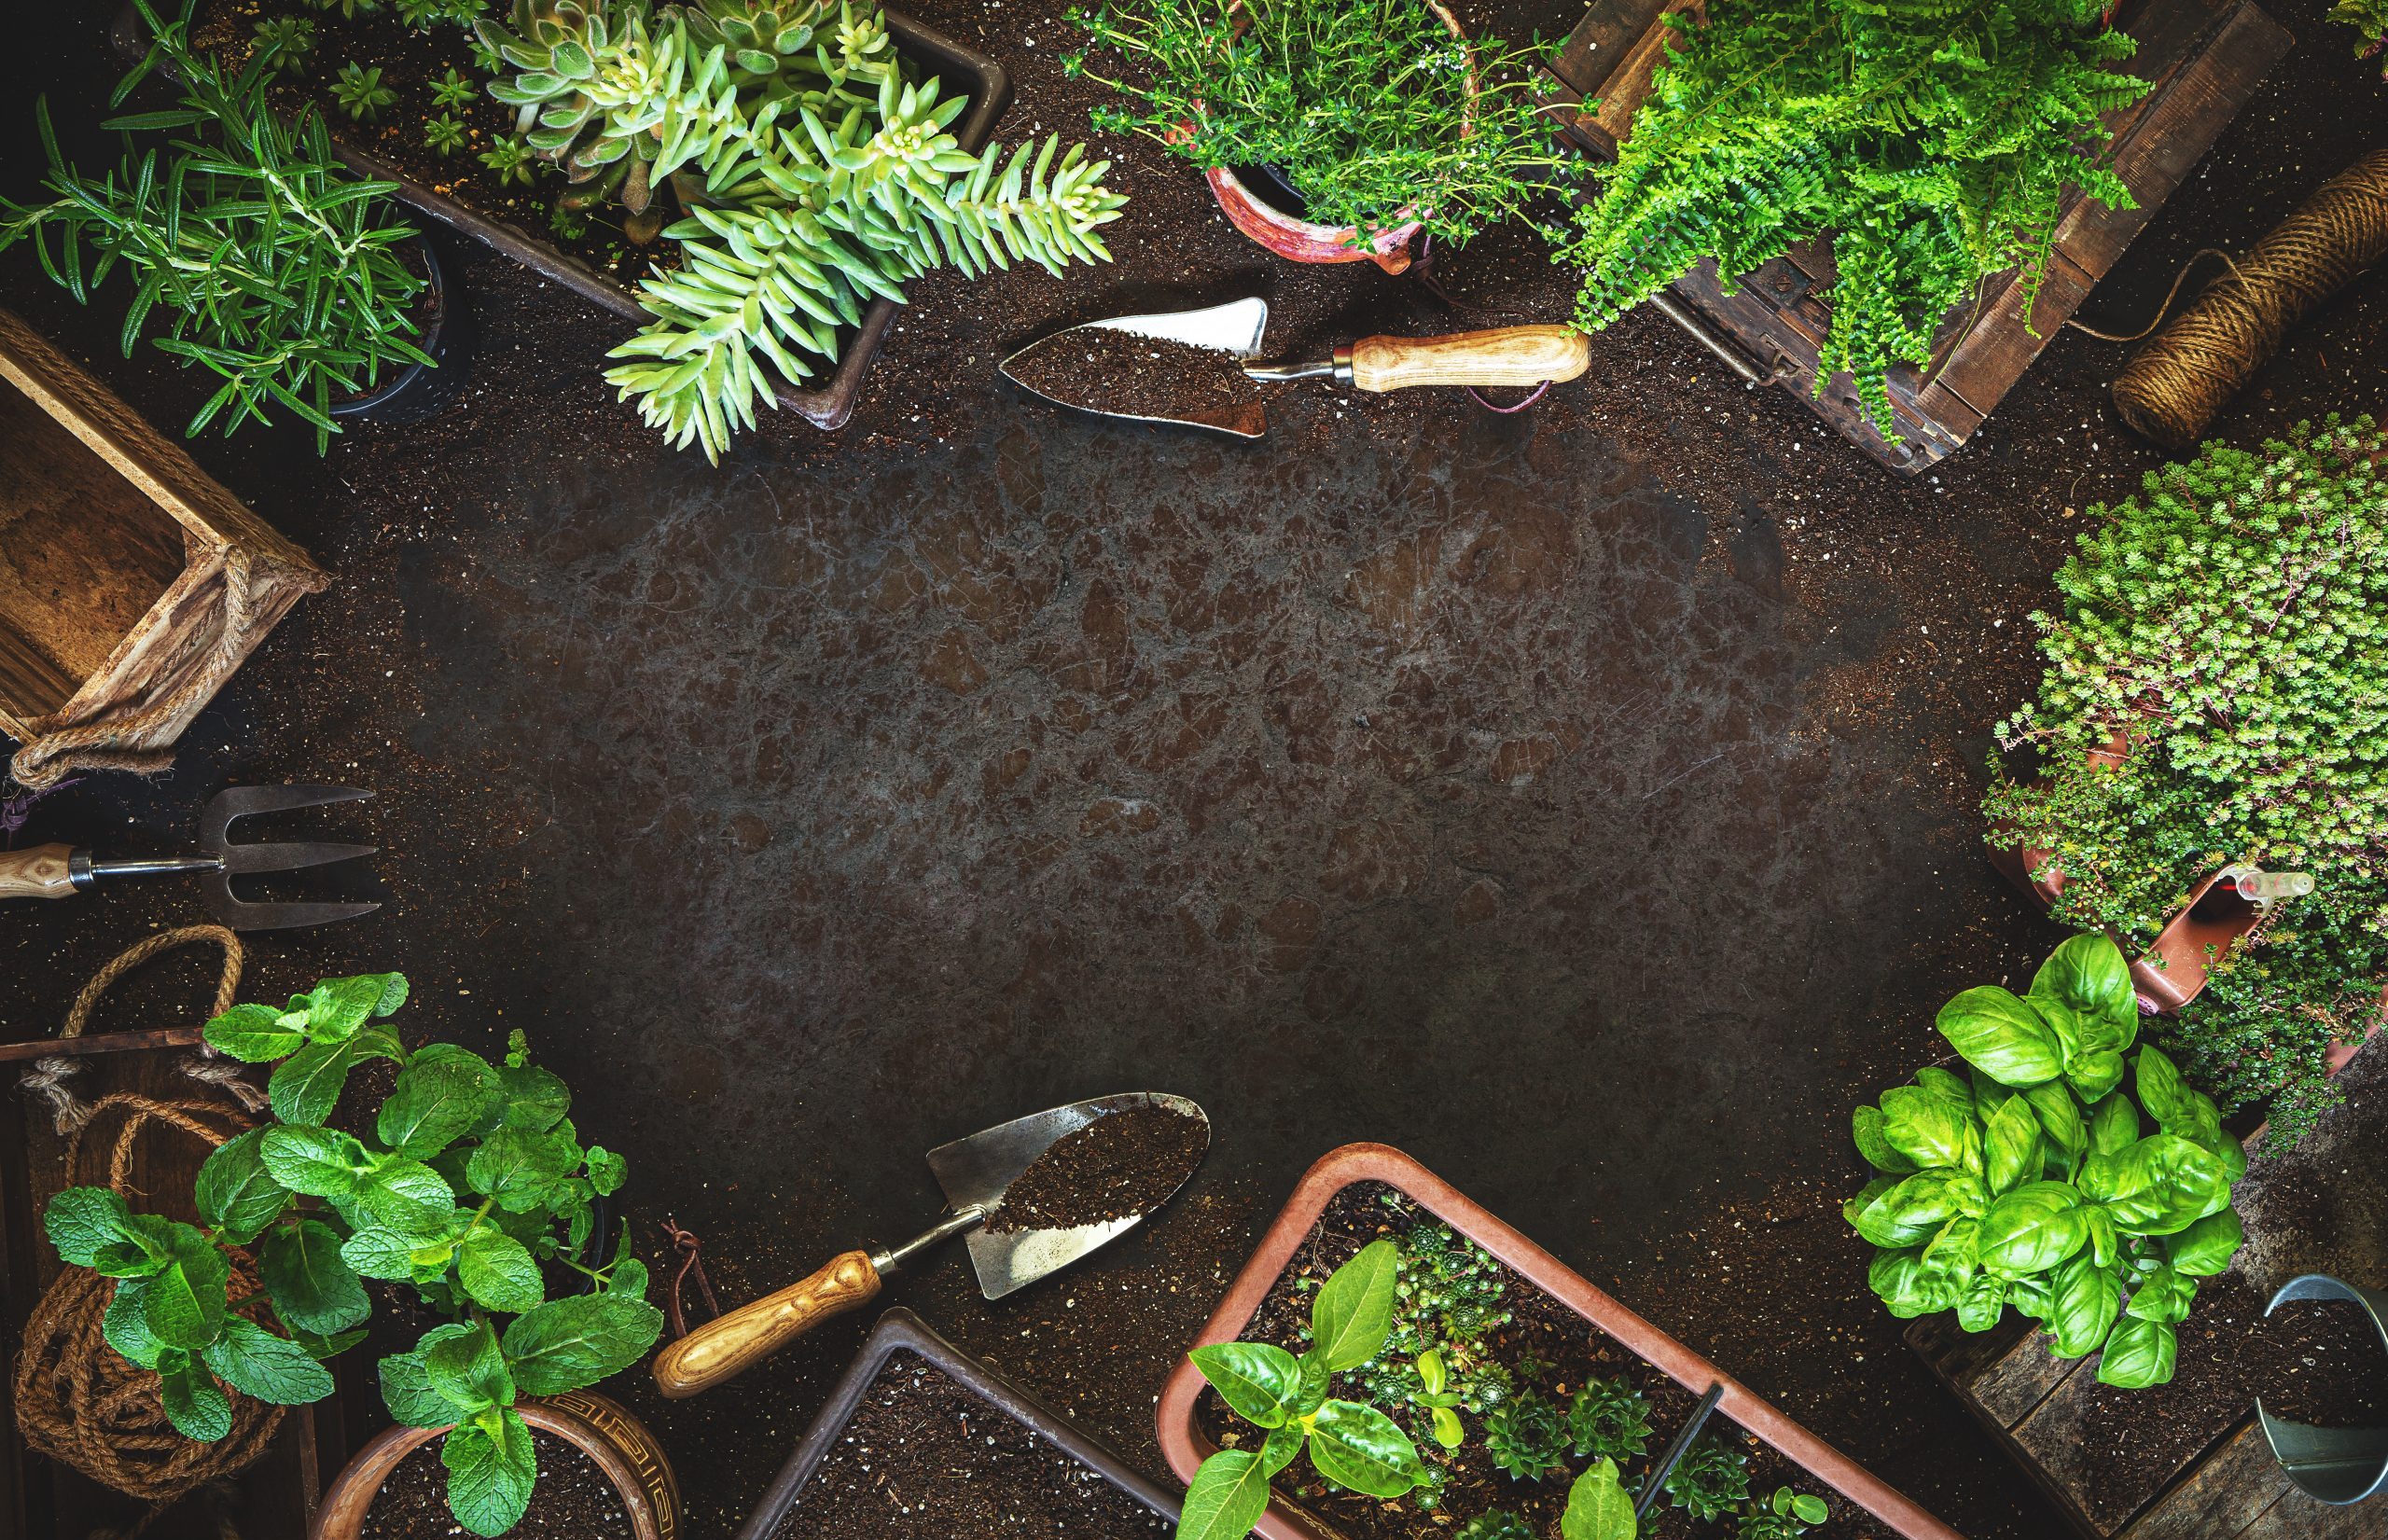 header image Midlands Compost - gardening background with garden tolls A9BGNJU scaled e1590252347210